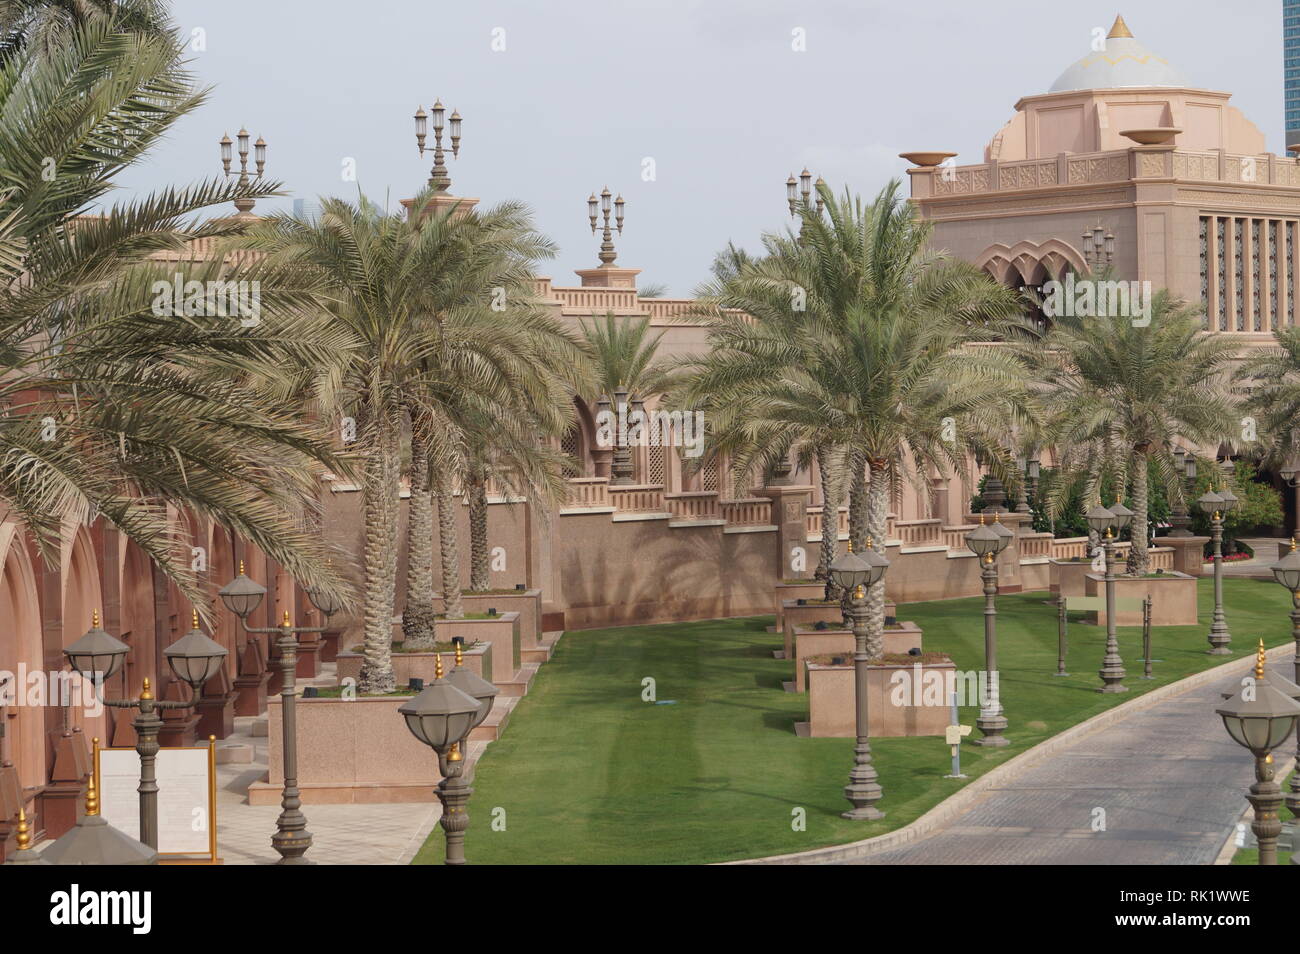 Day trip to Emirates Palace - Abu Dhabi Stock Photo